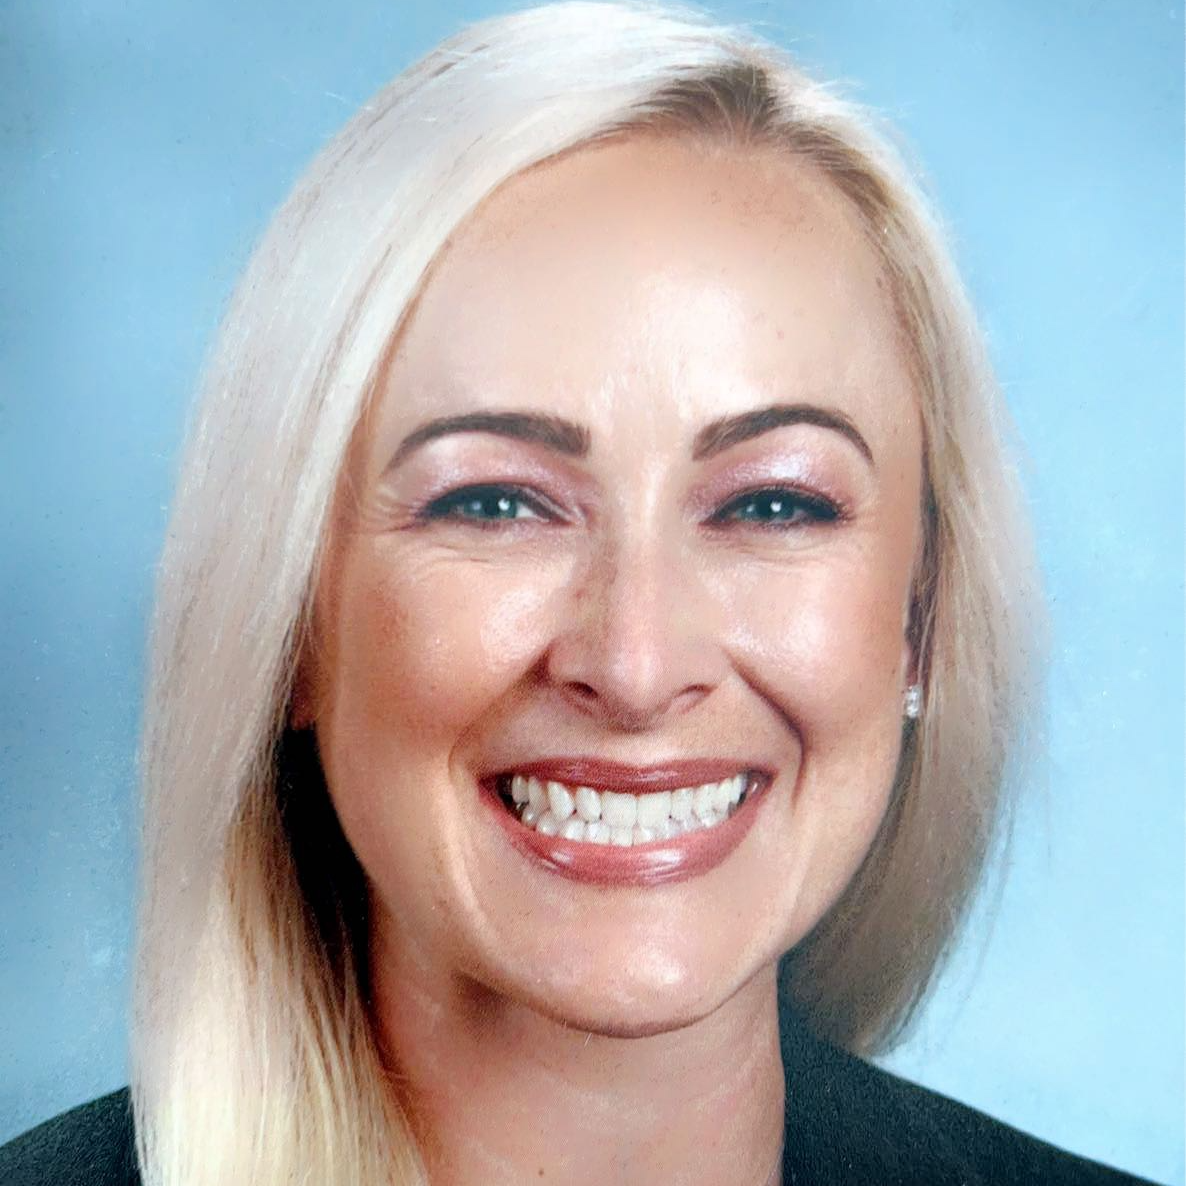 Principal Justine Greenleaf